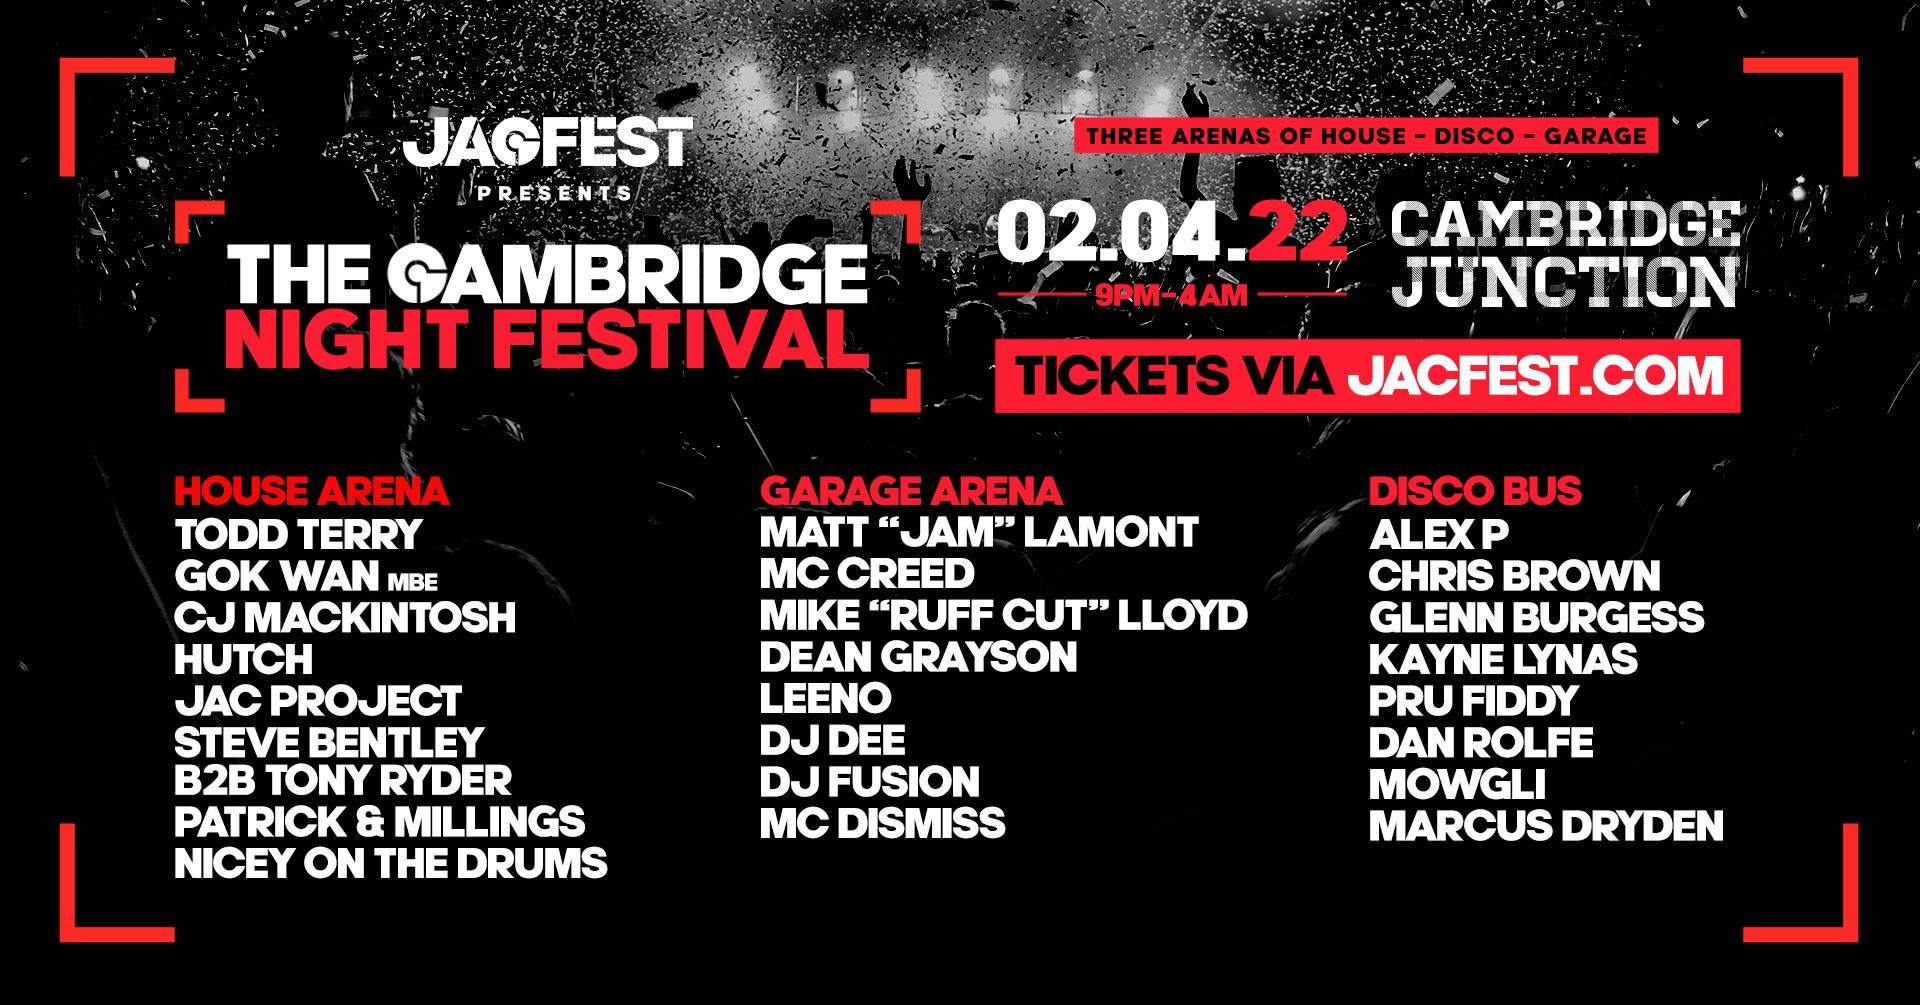 Jacfest present The Cambridge Night Festival - Página frontal